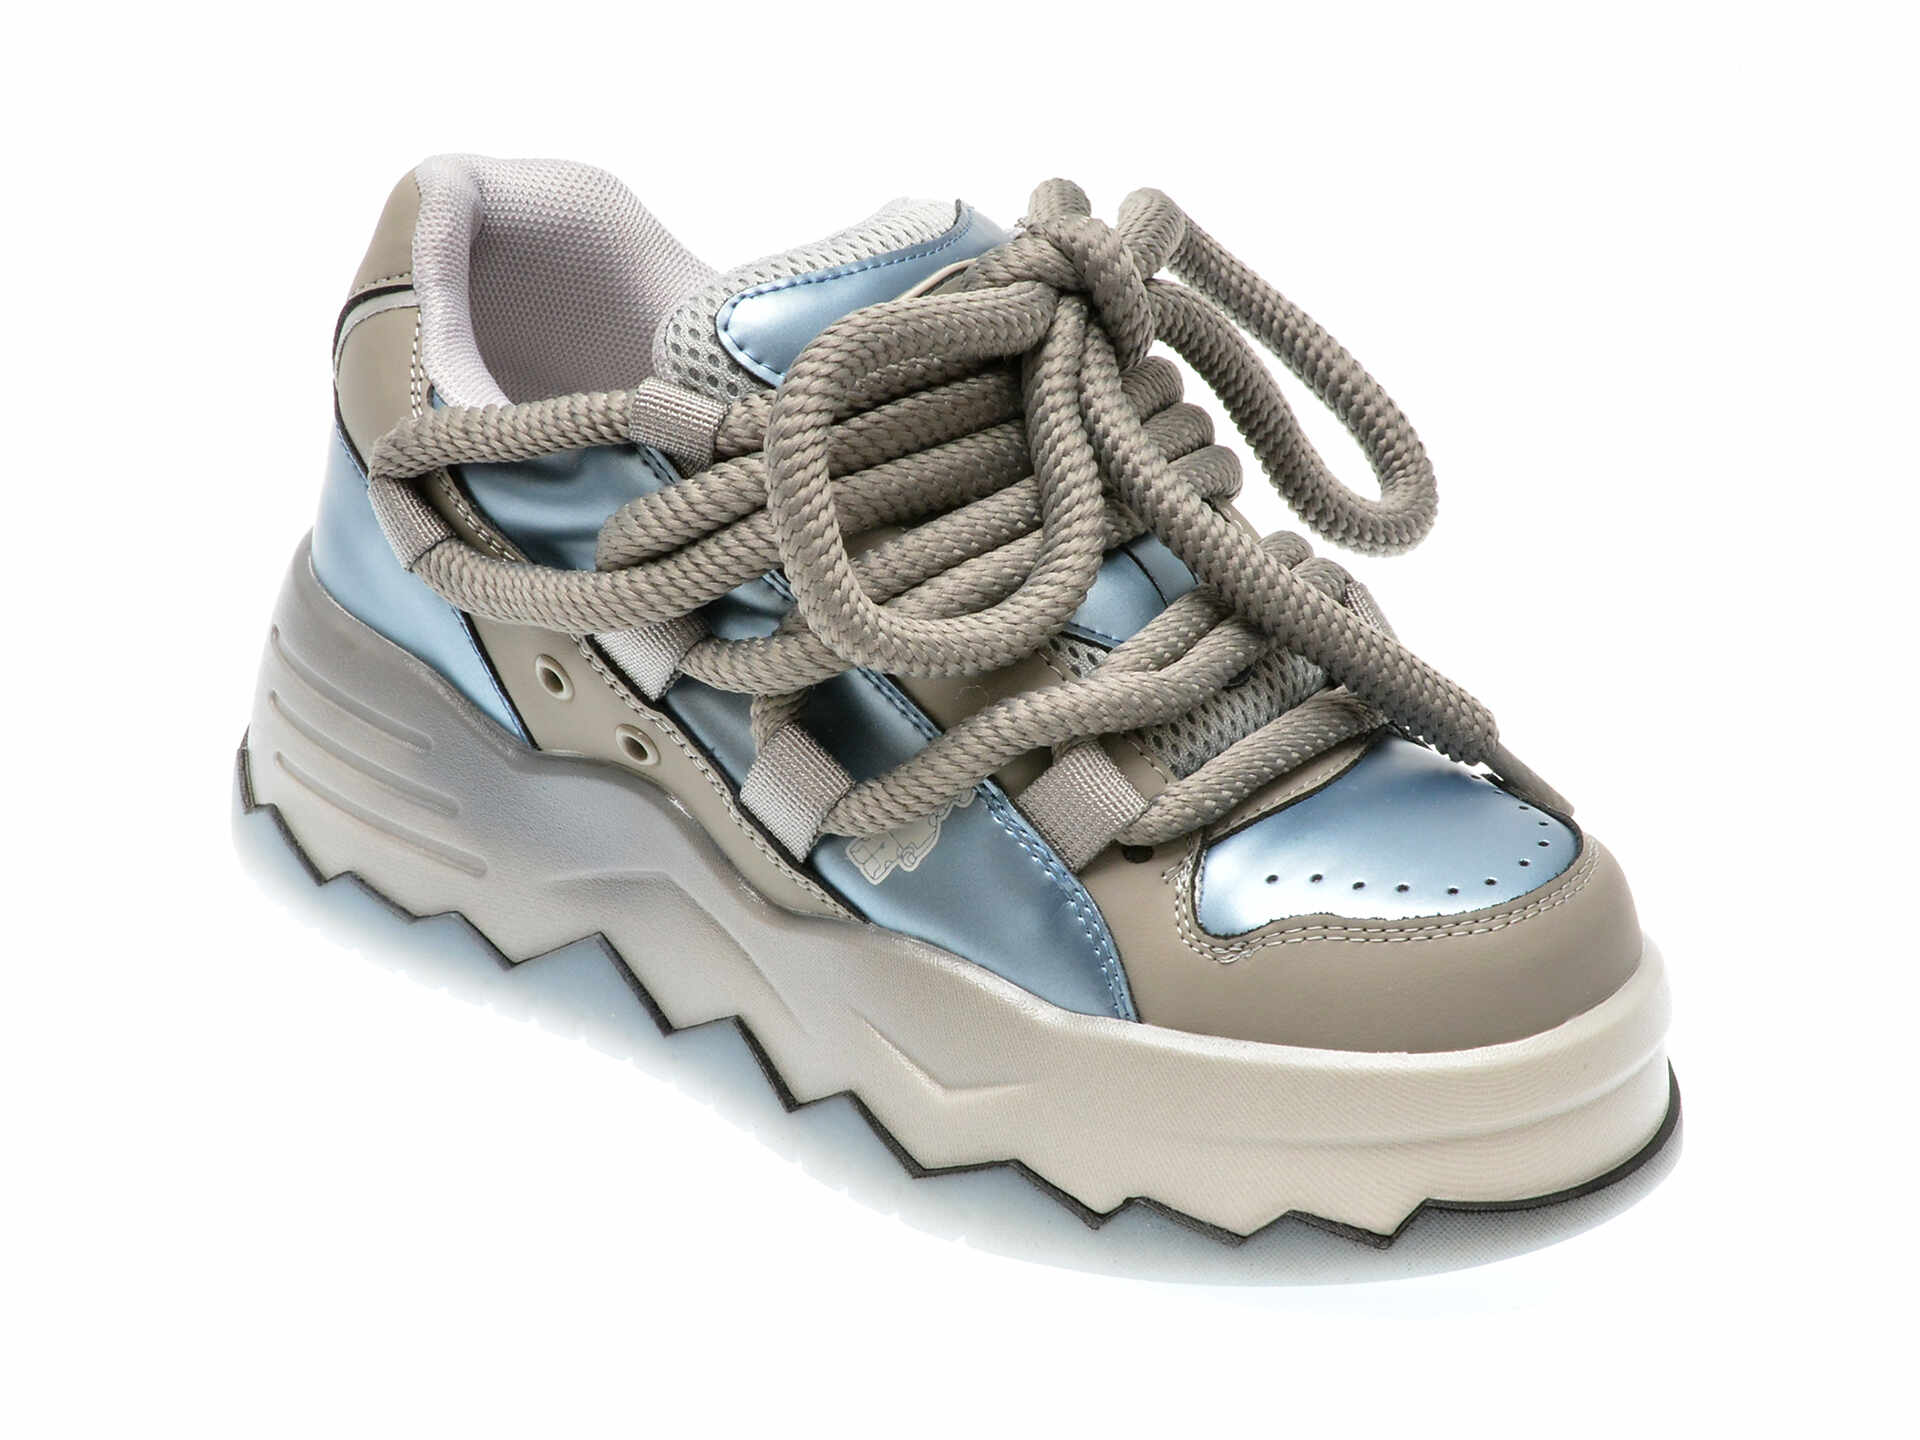 Pantofi sport FLAVIA PASSINI albastri, 3826, din piele naturala